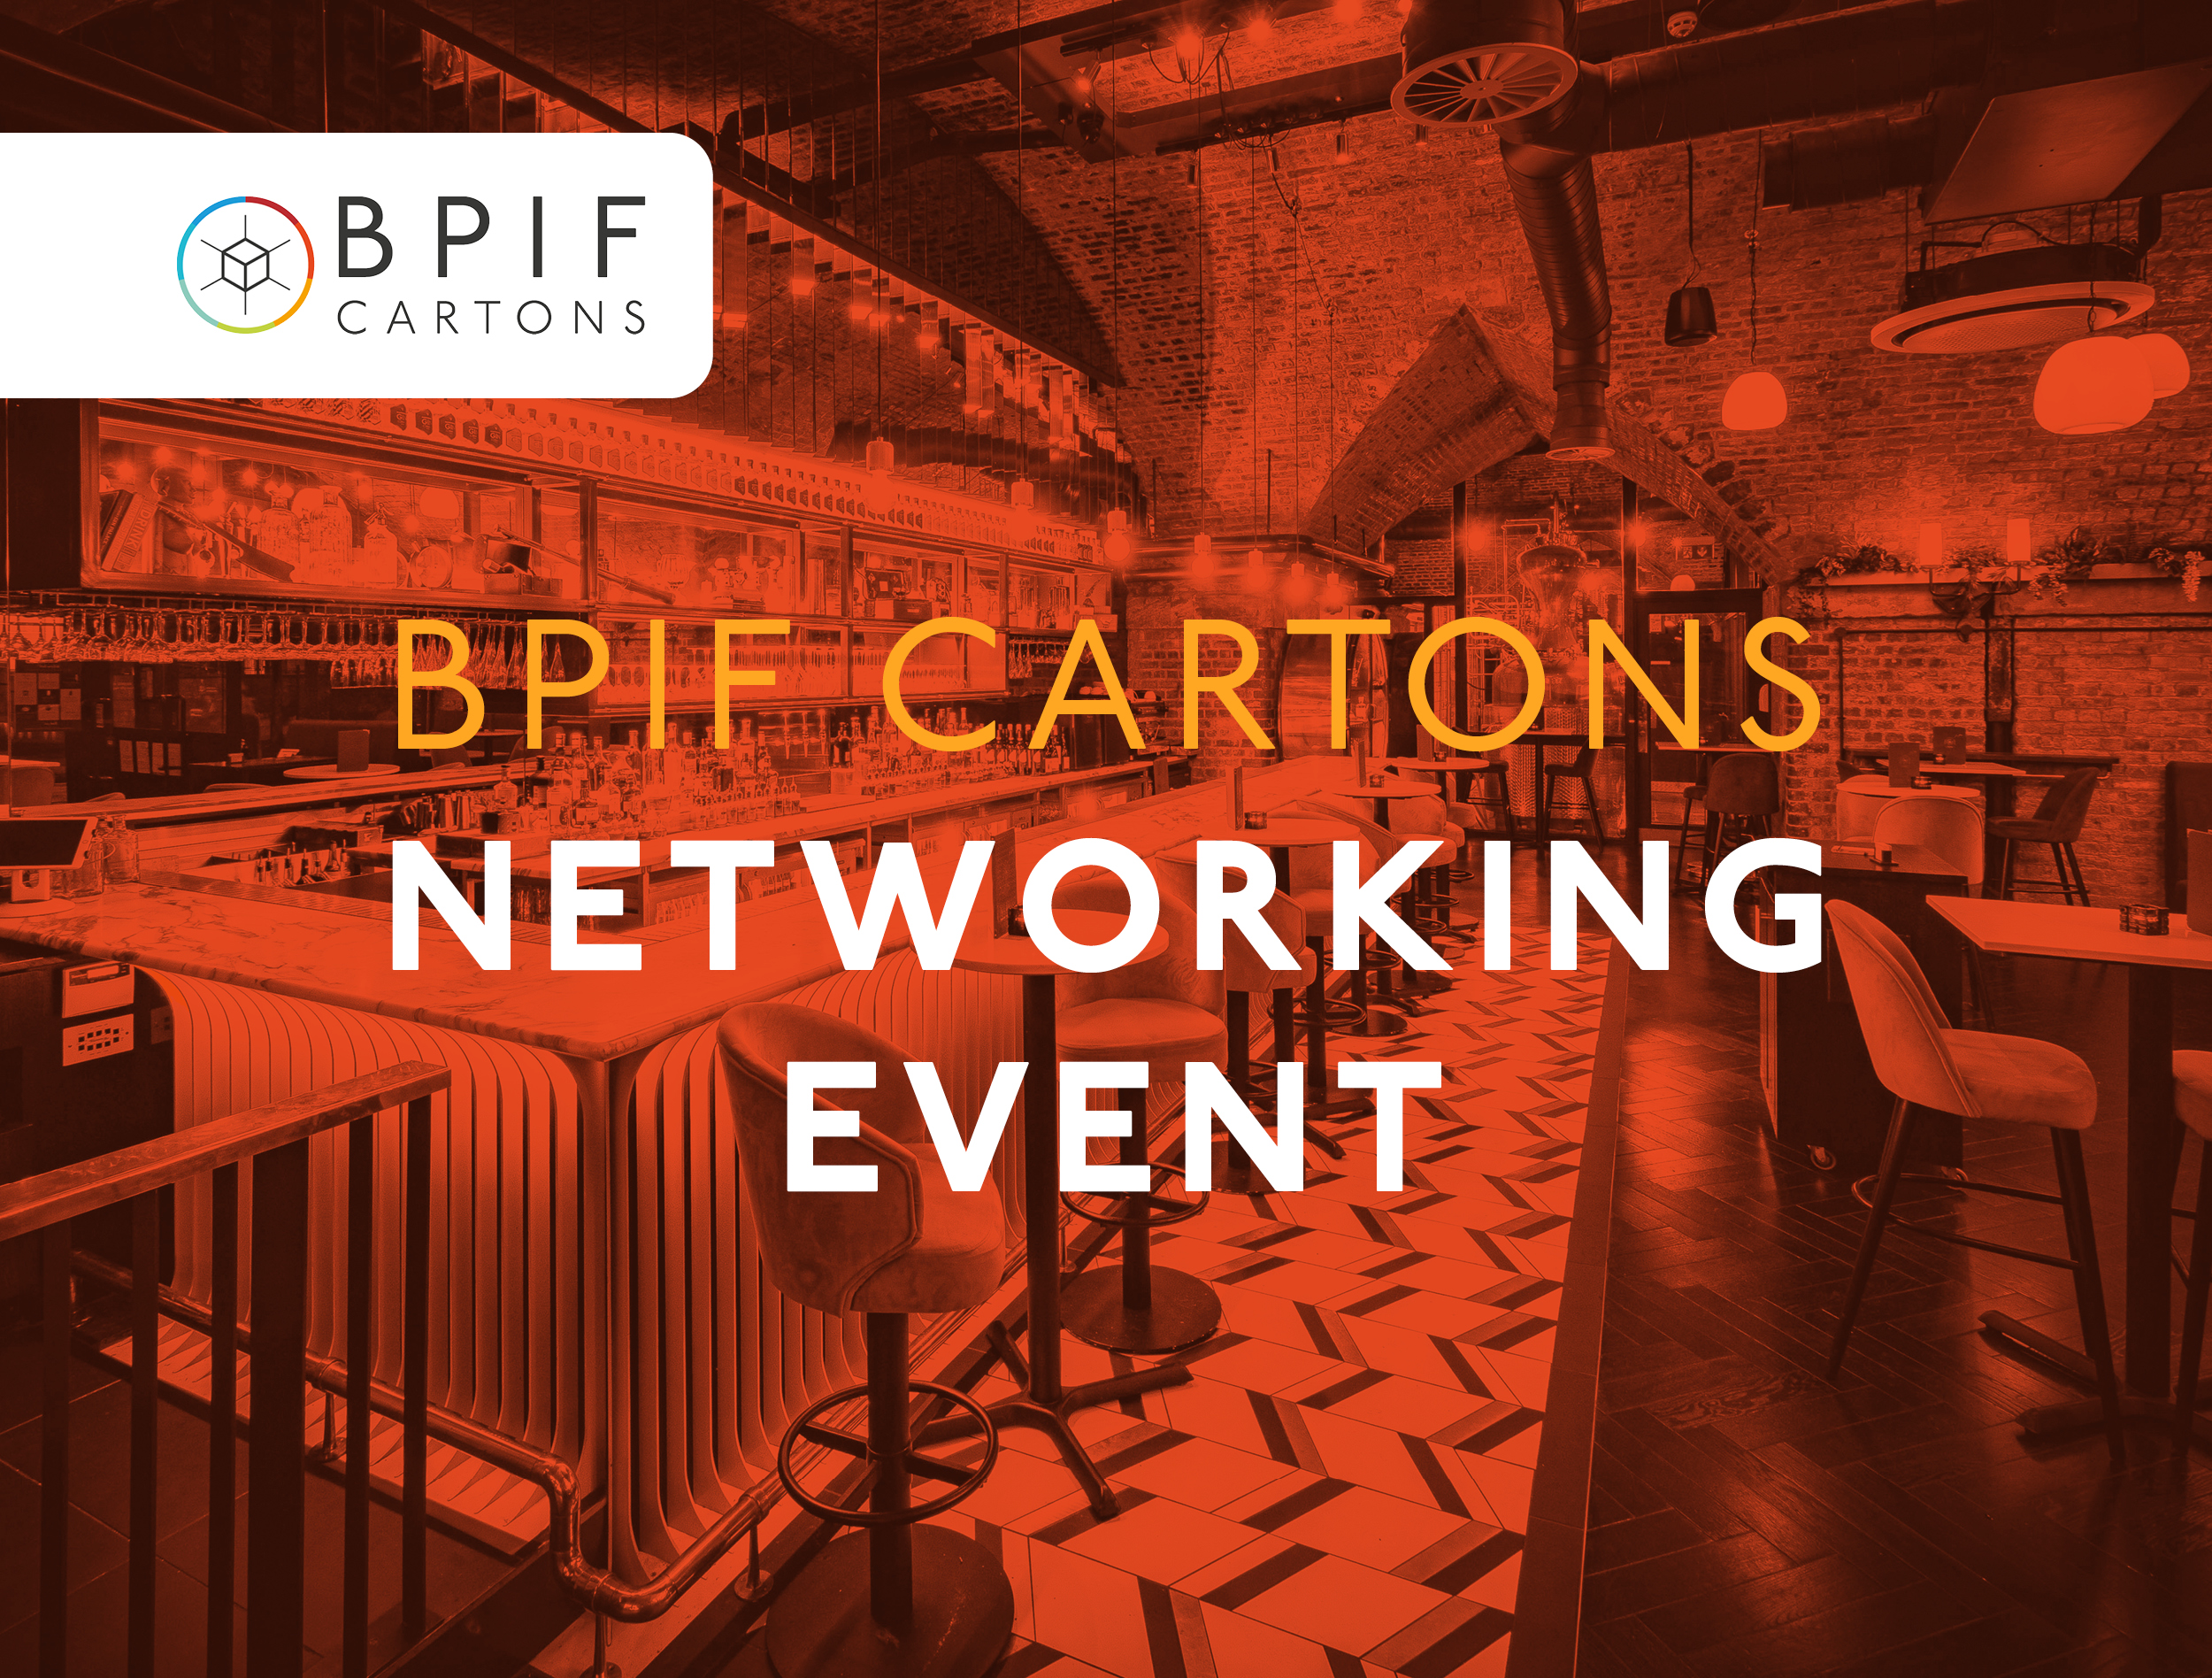 BPIF Cartons Networking Event